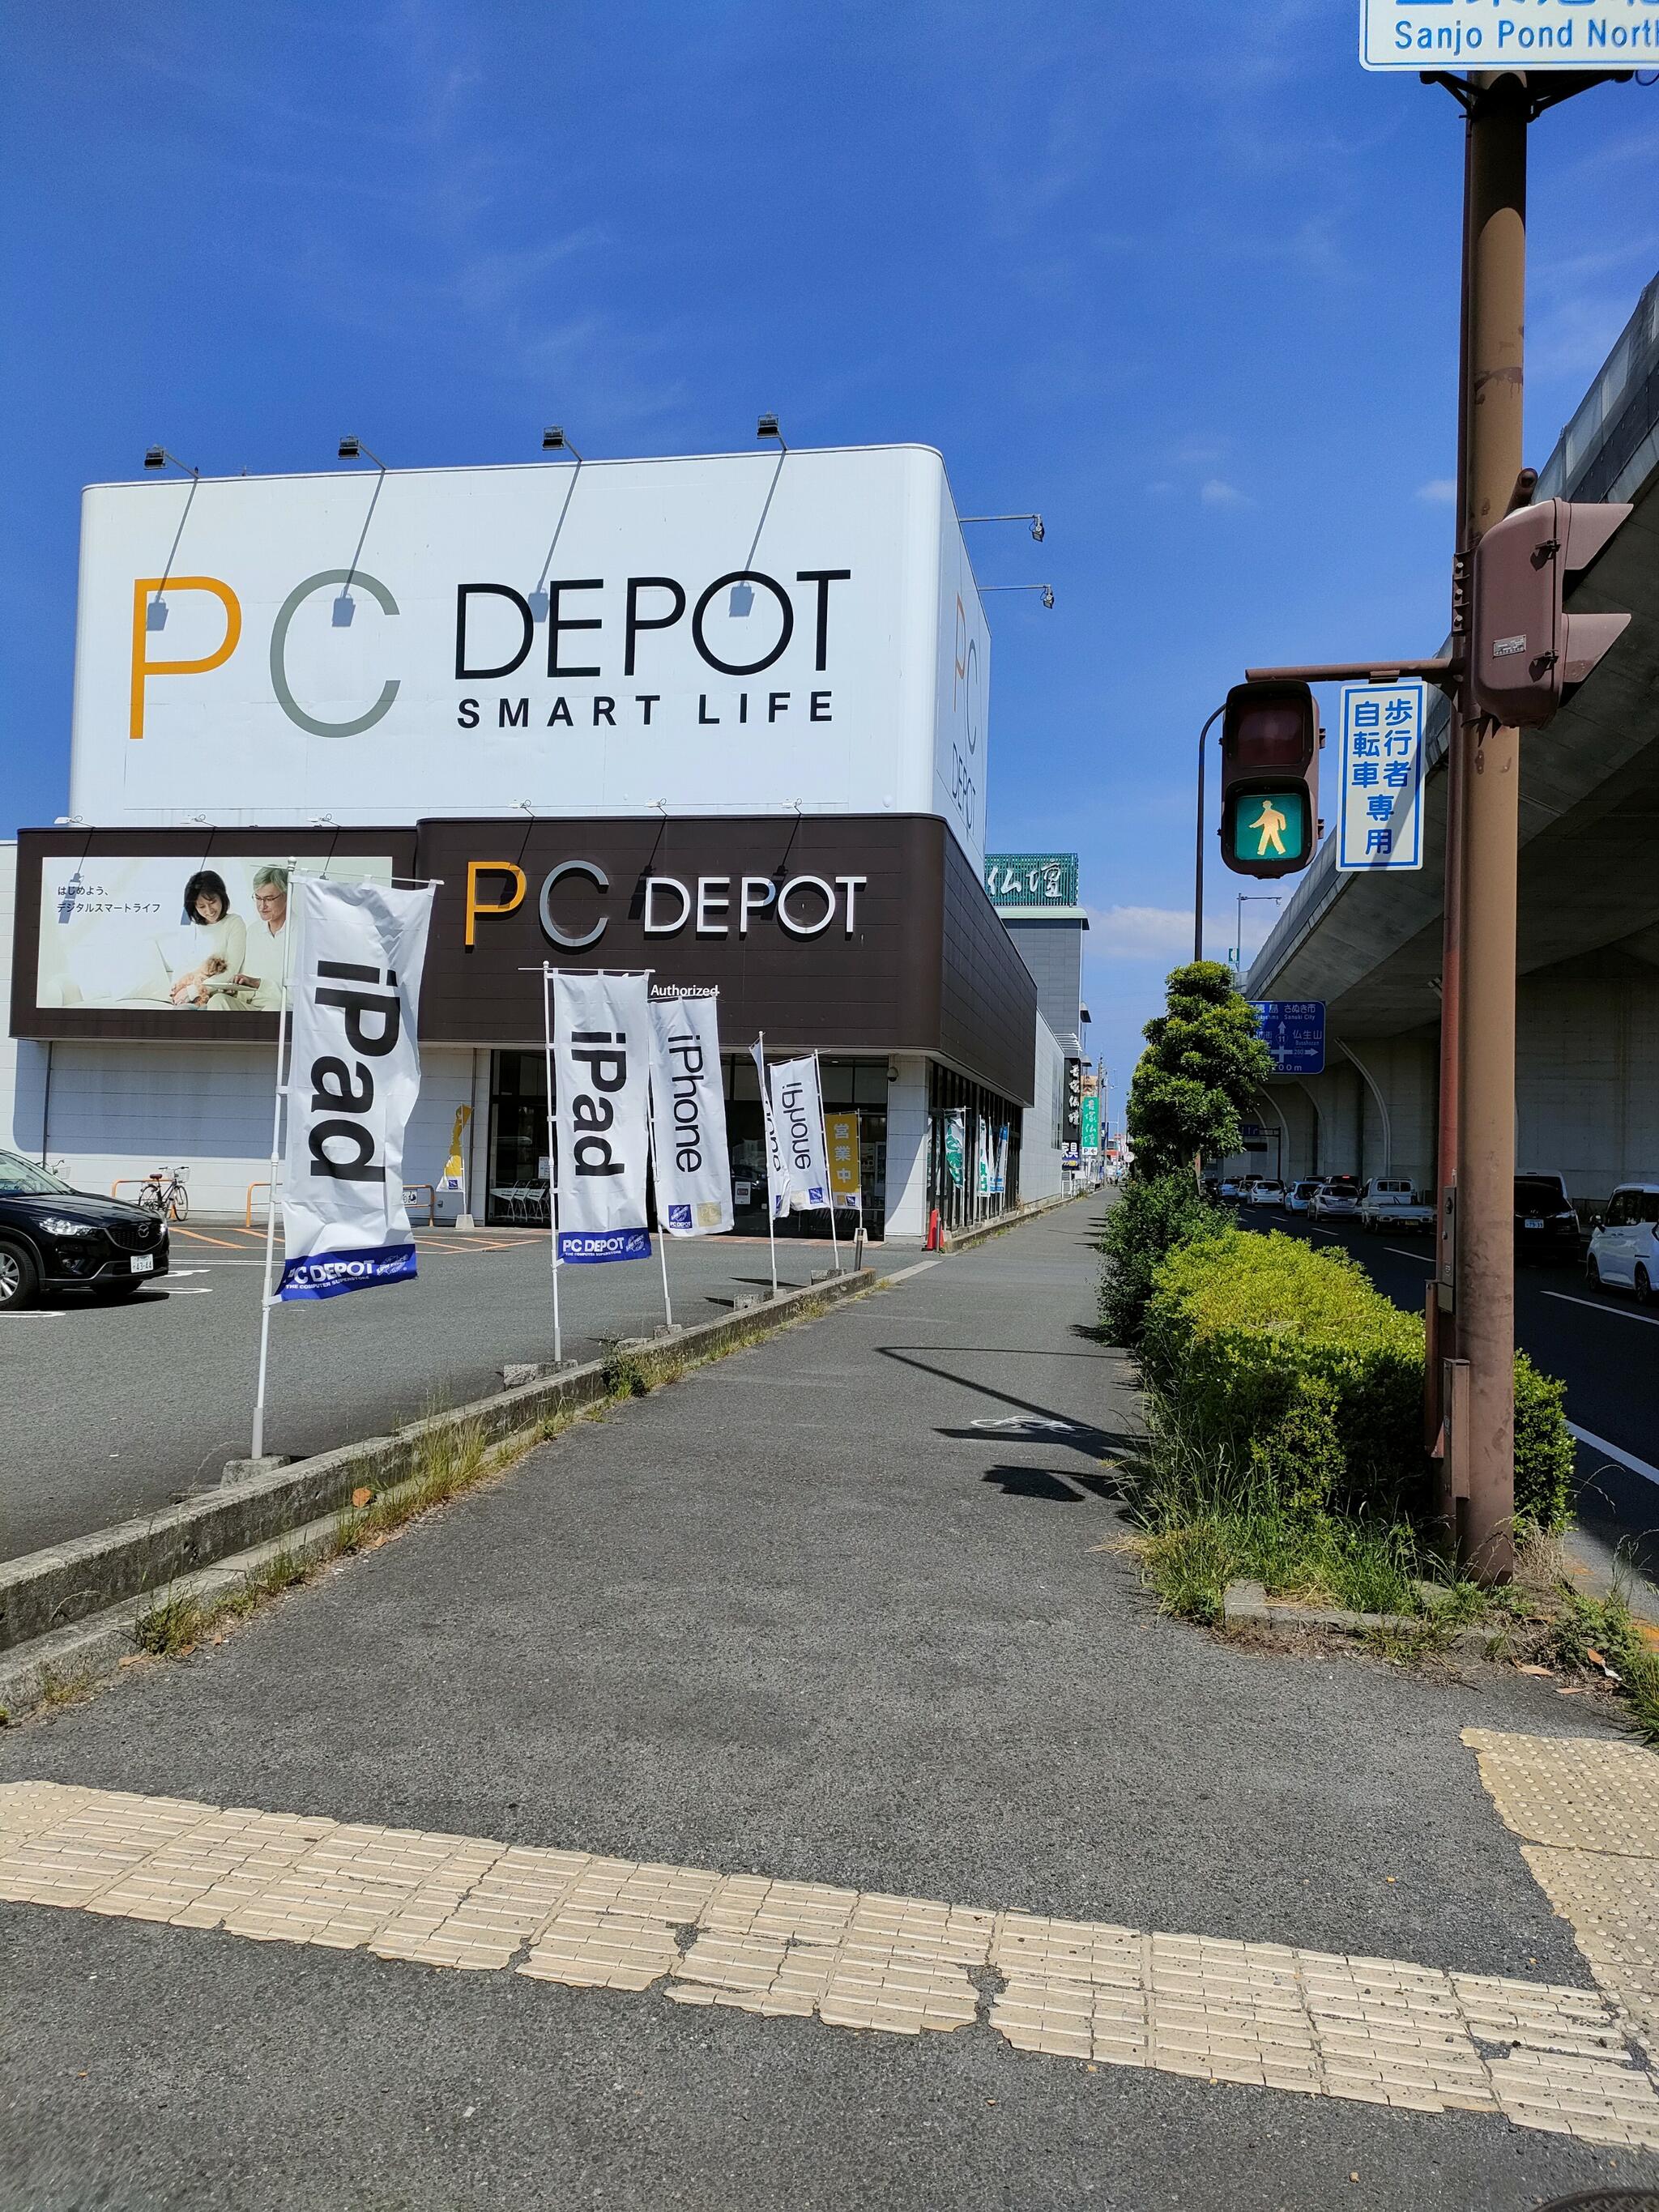 PCデポ スマートライフ高松東バイパス店の代表写真1